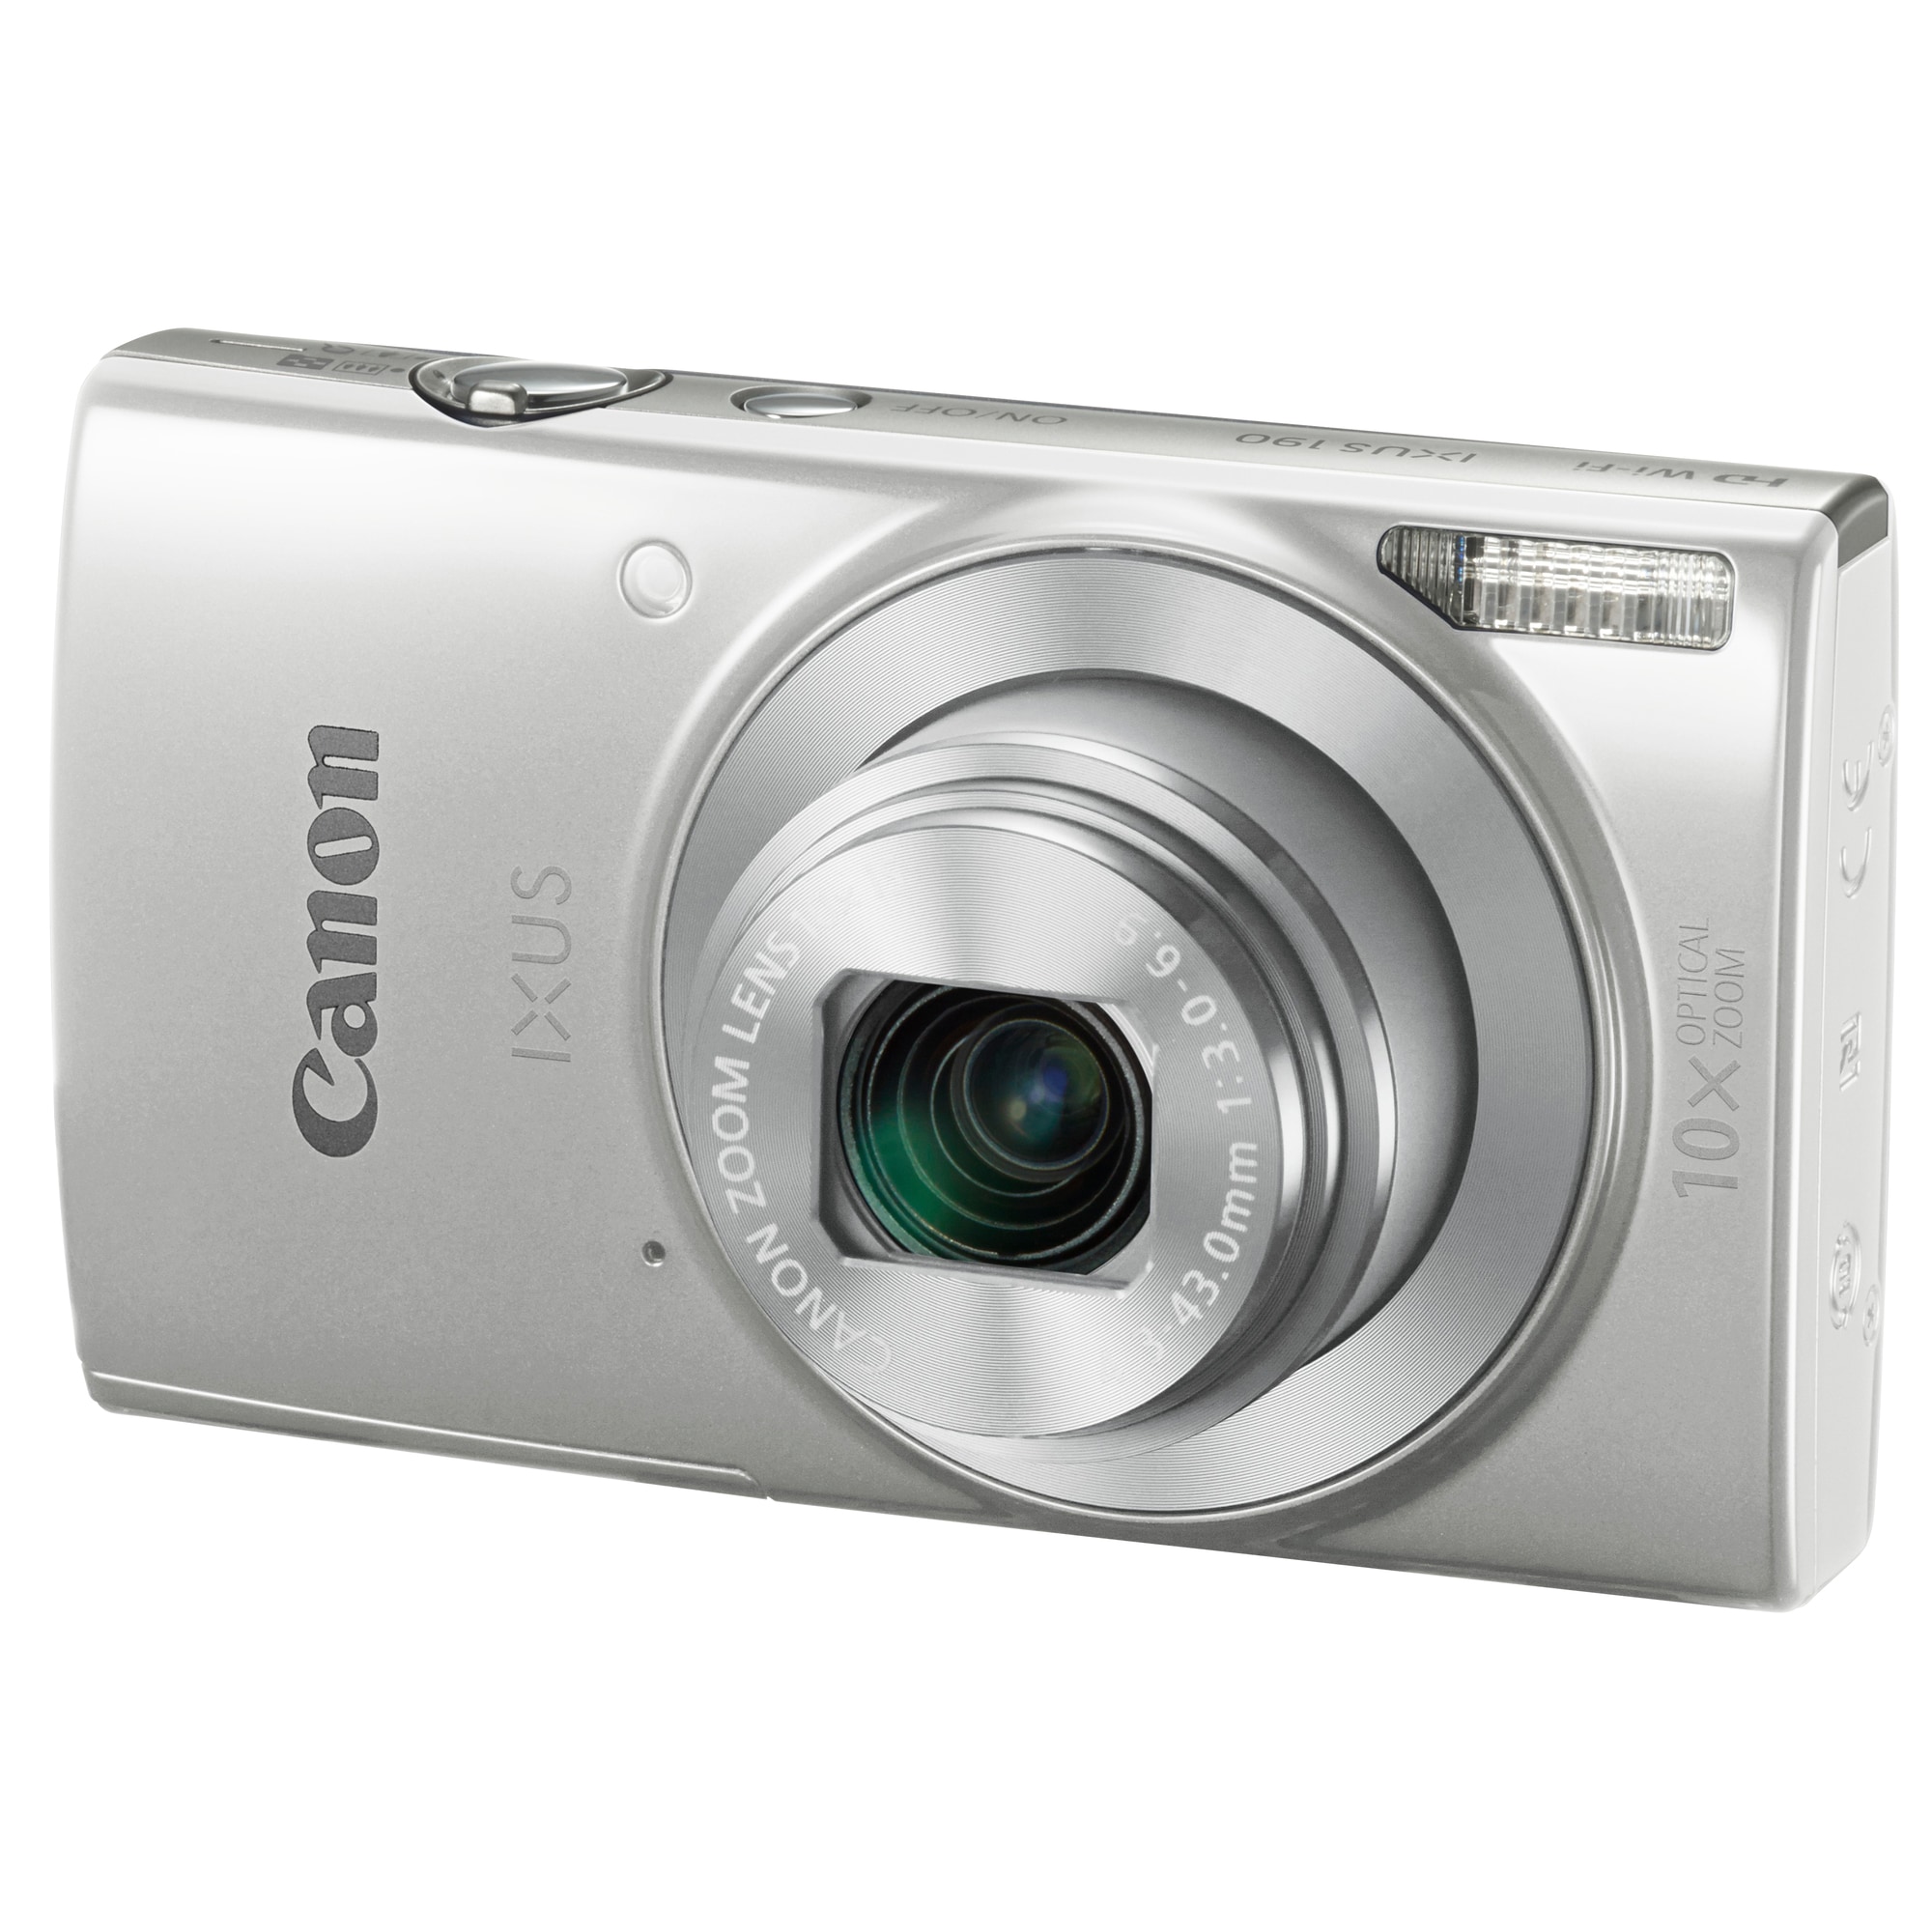 Canon Ixus 190 kompakt kamera - sølv | Elgiganten